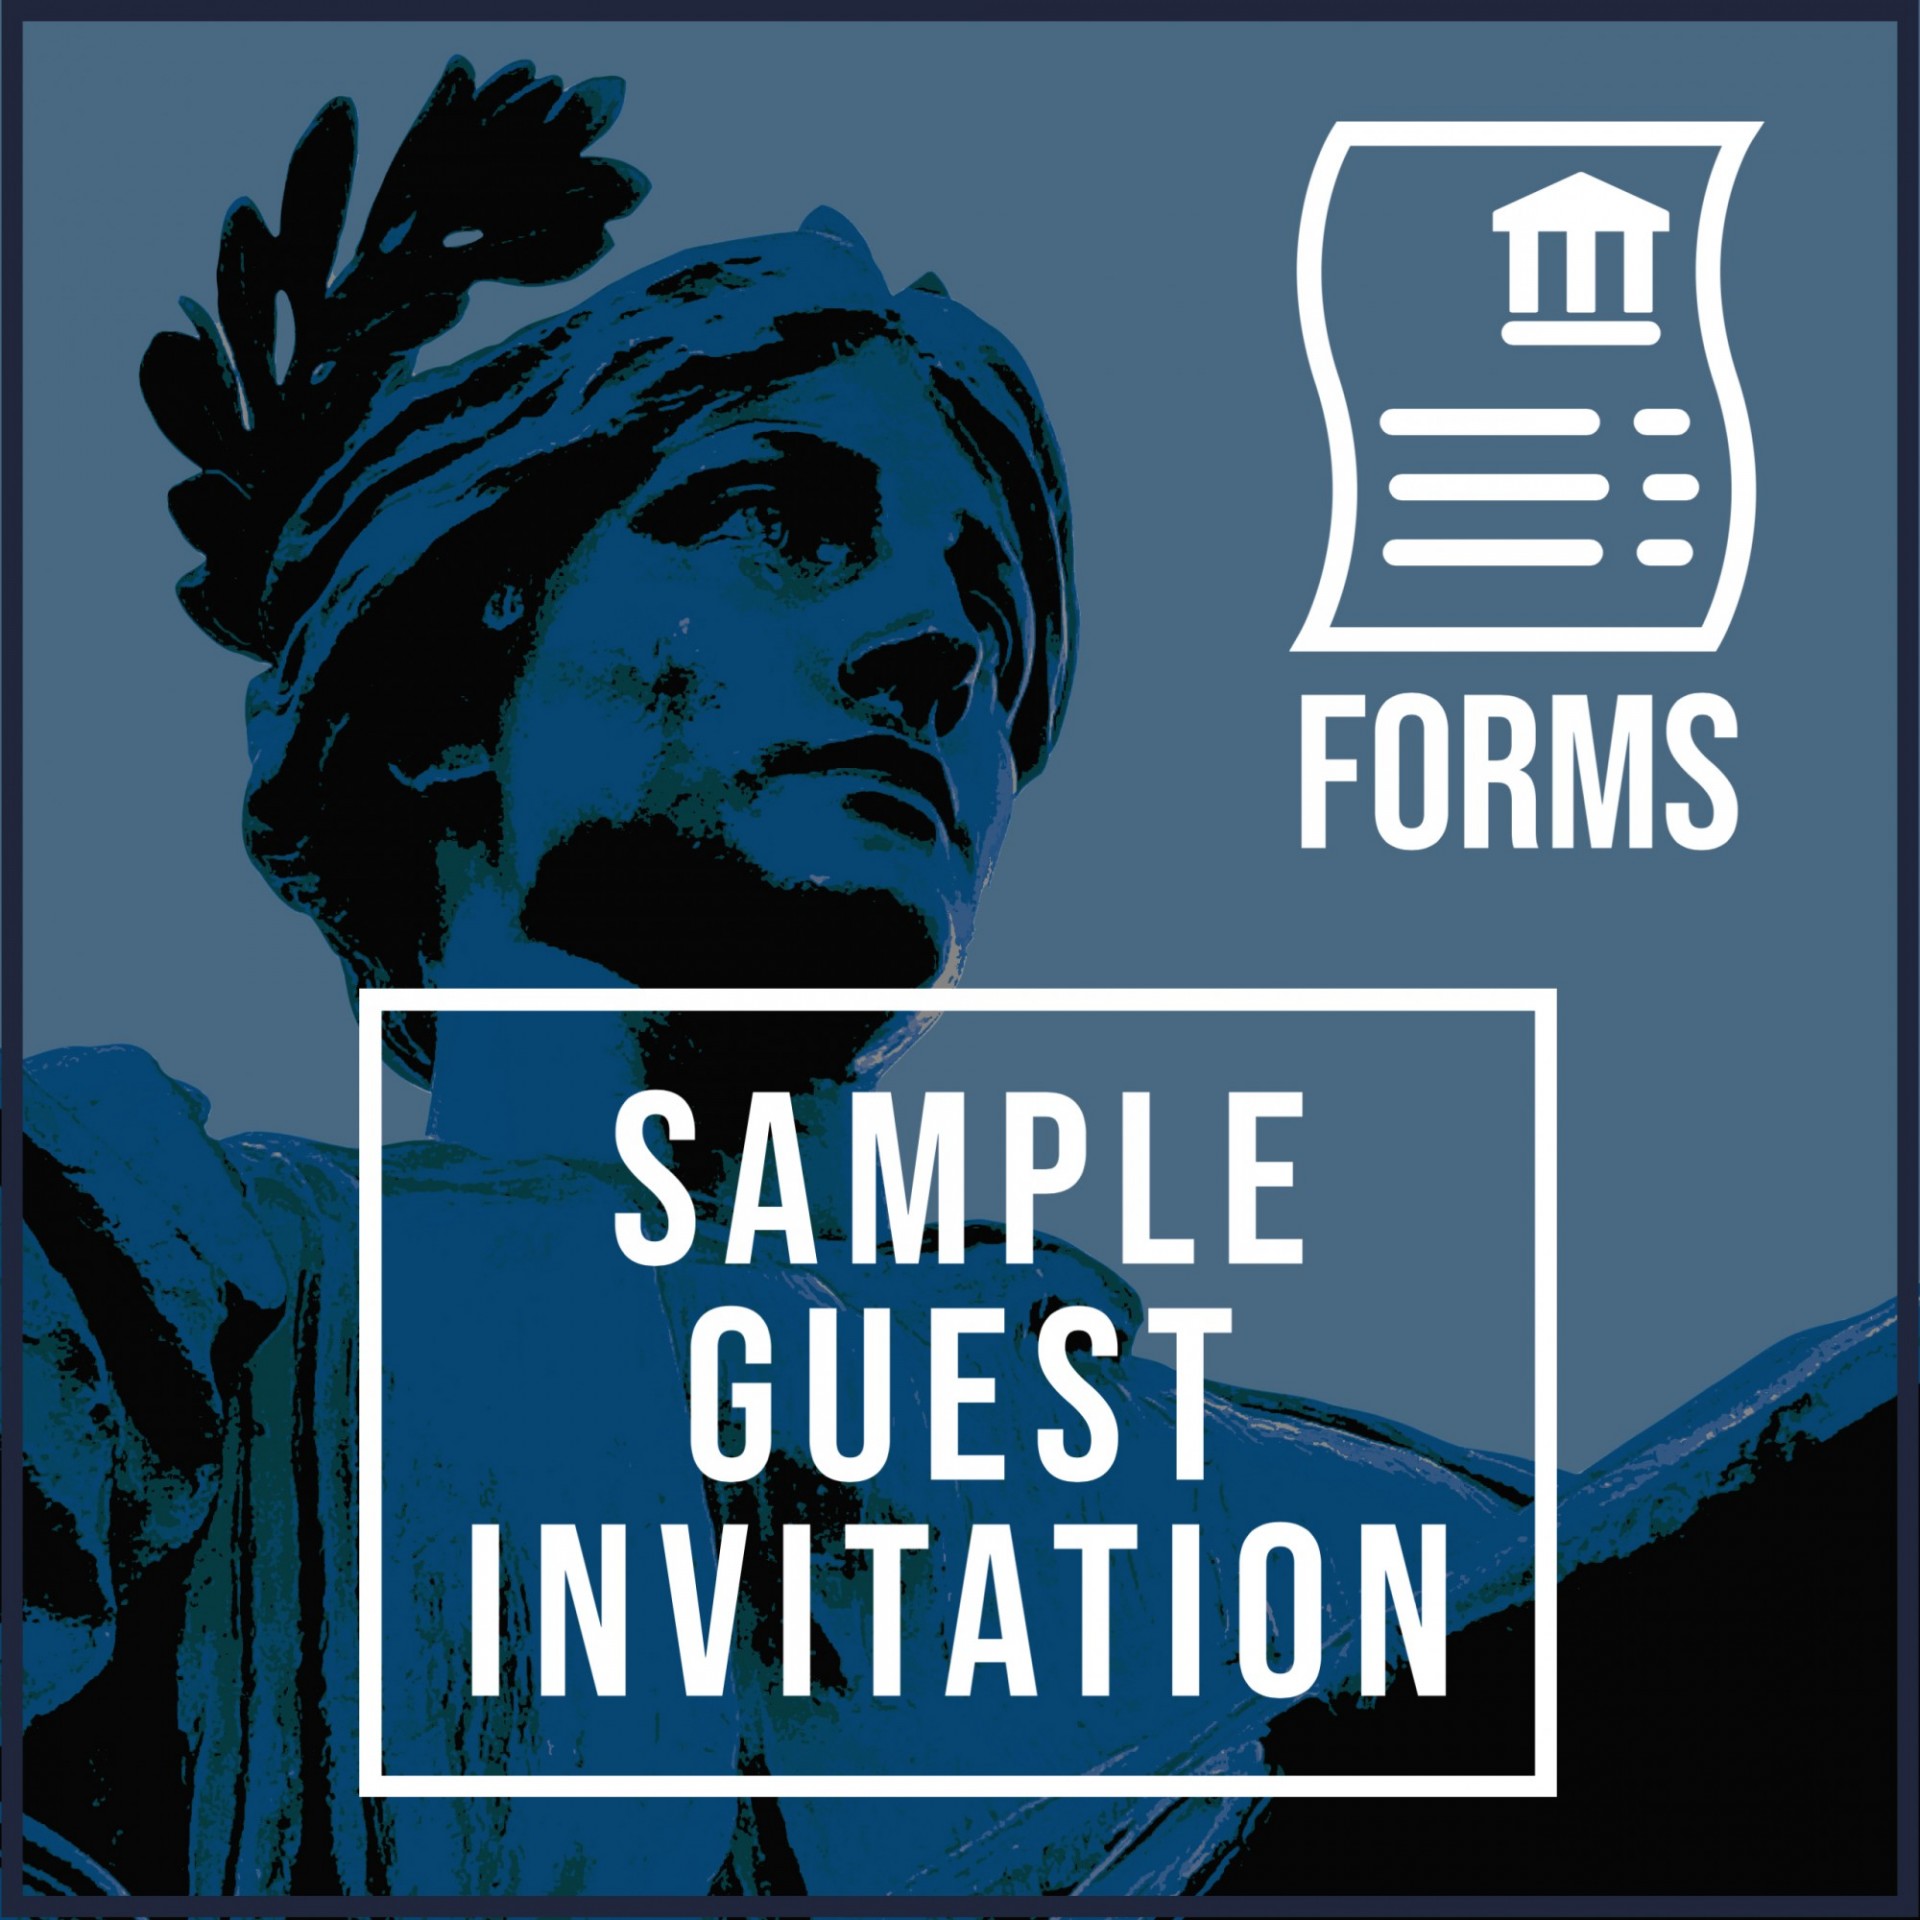 Forms Icon: Sample Guest Invitation